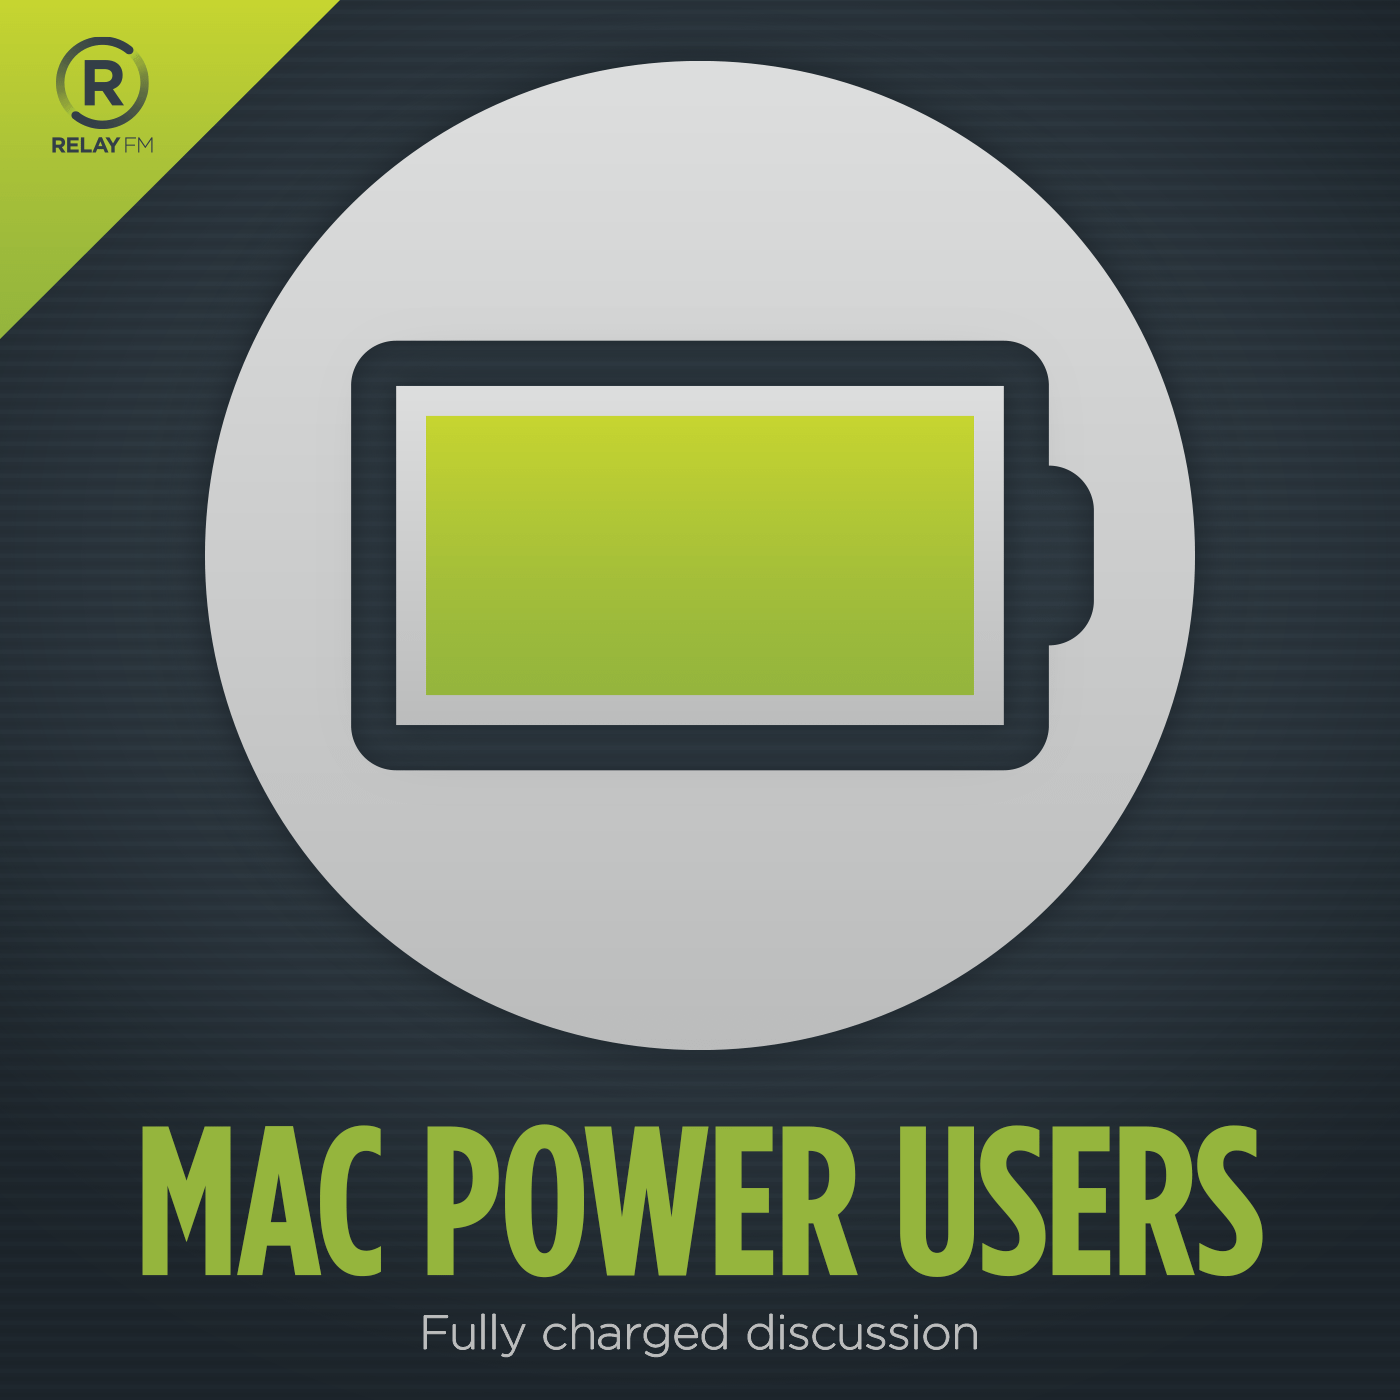 Mac Power Users logo